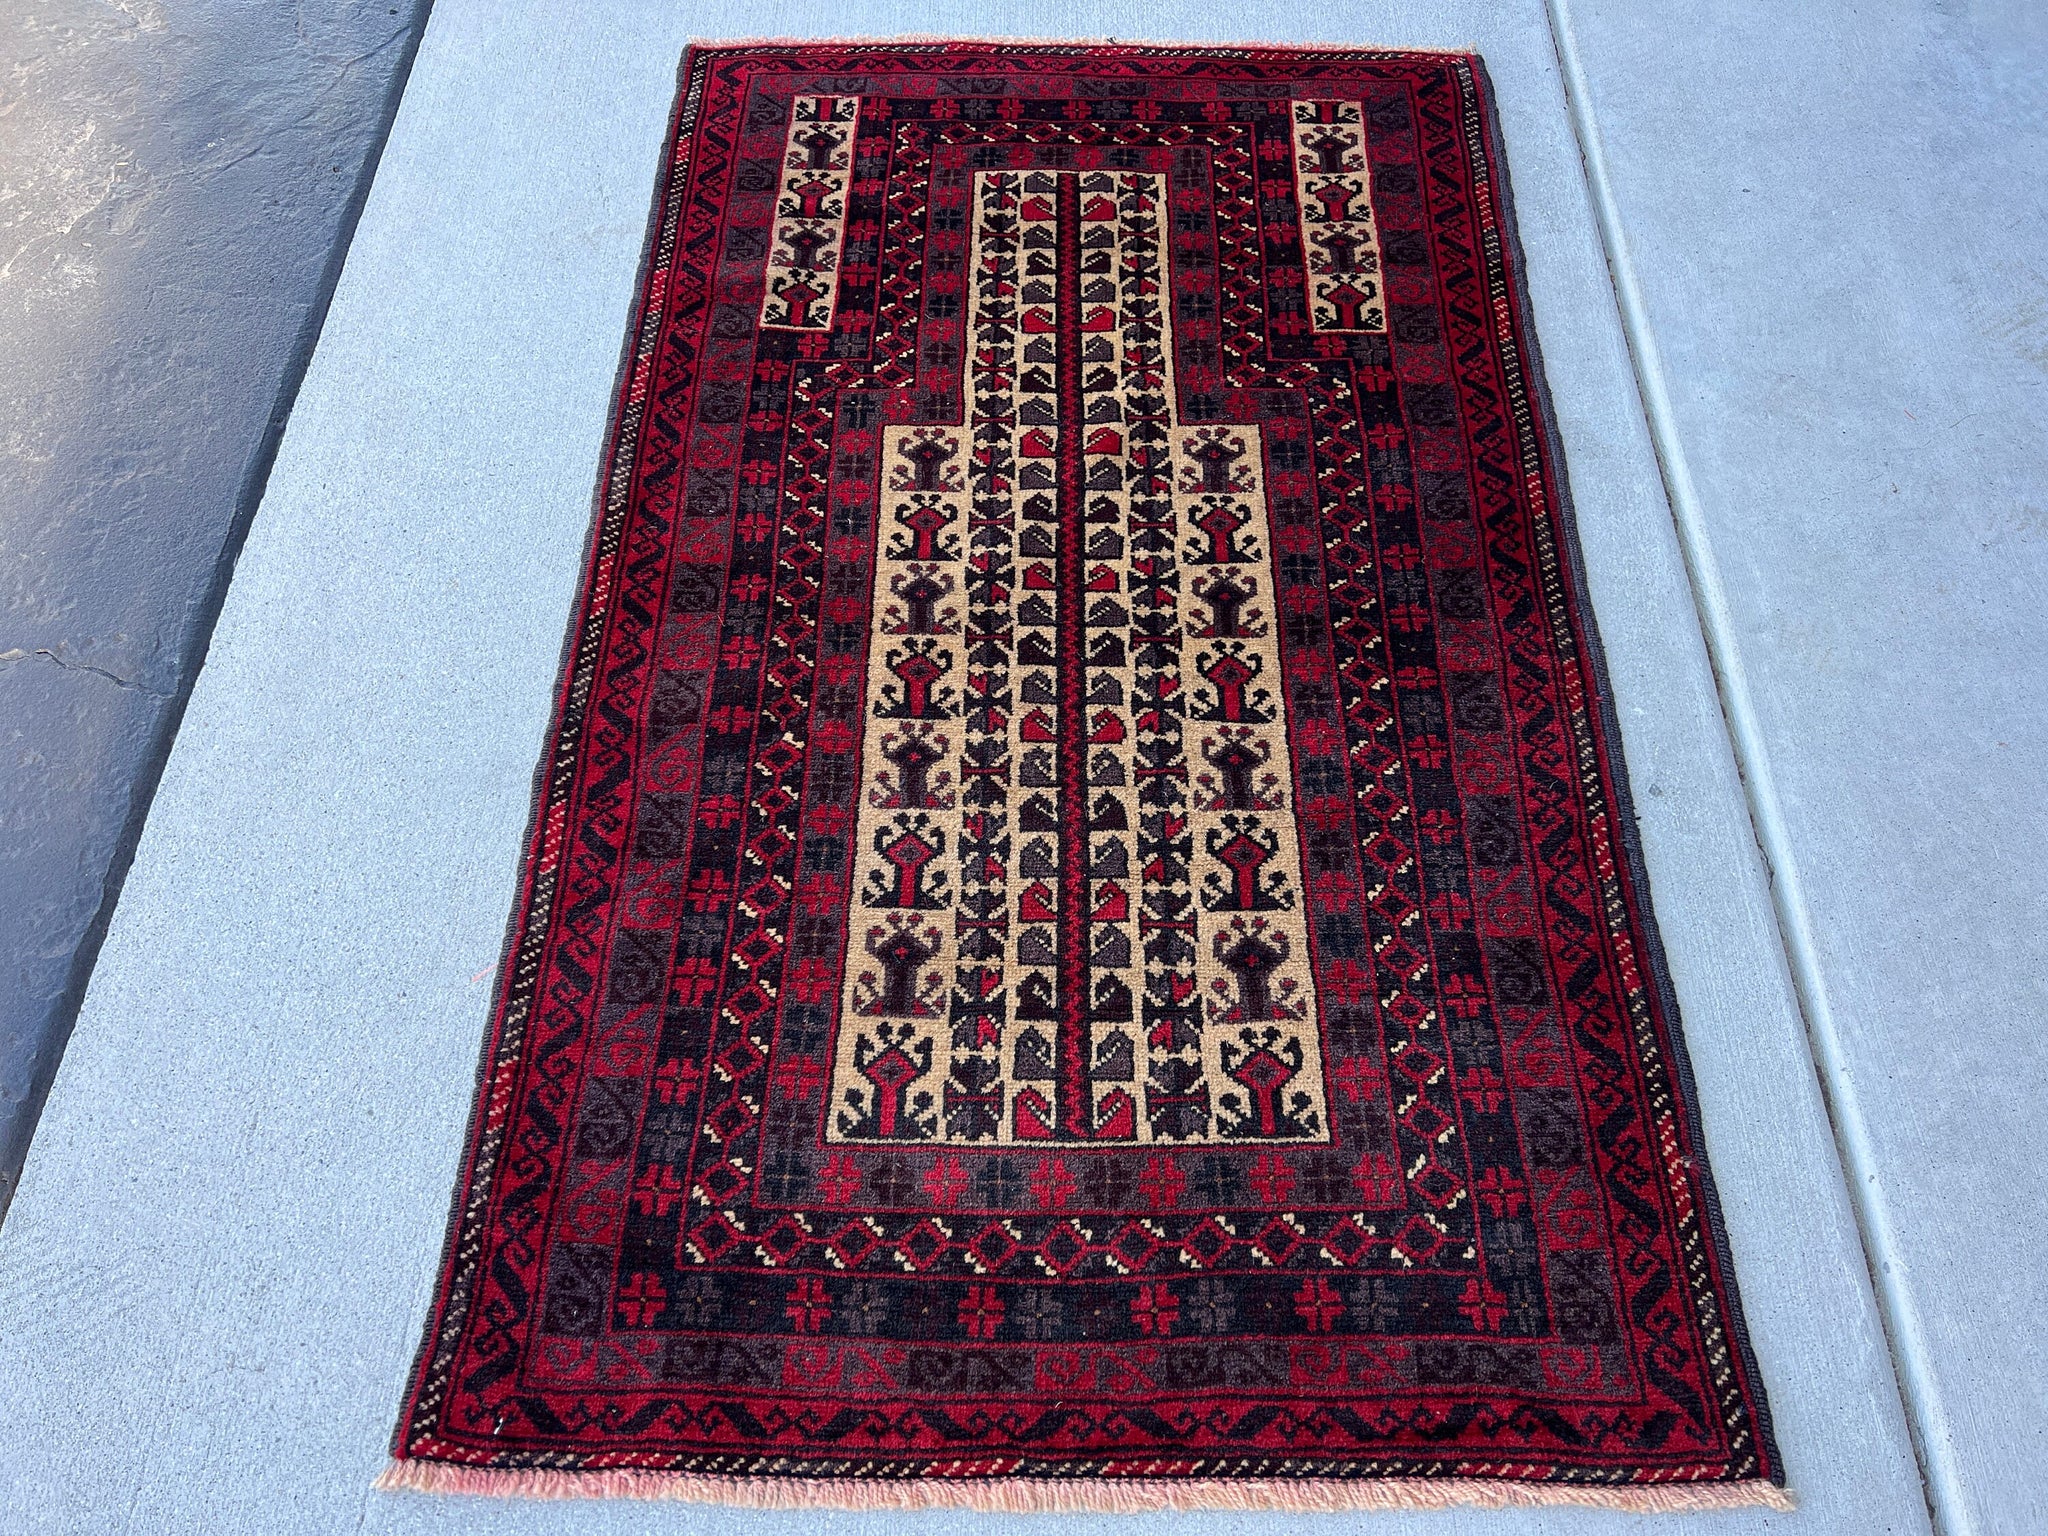 3x5 (100x180) Handmade Vintage Baluch Afghan Rug | Blood Red Cream Beige Grey Black | Hand Knotted Prayer Rug Persian Turkish Bohemian Wool